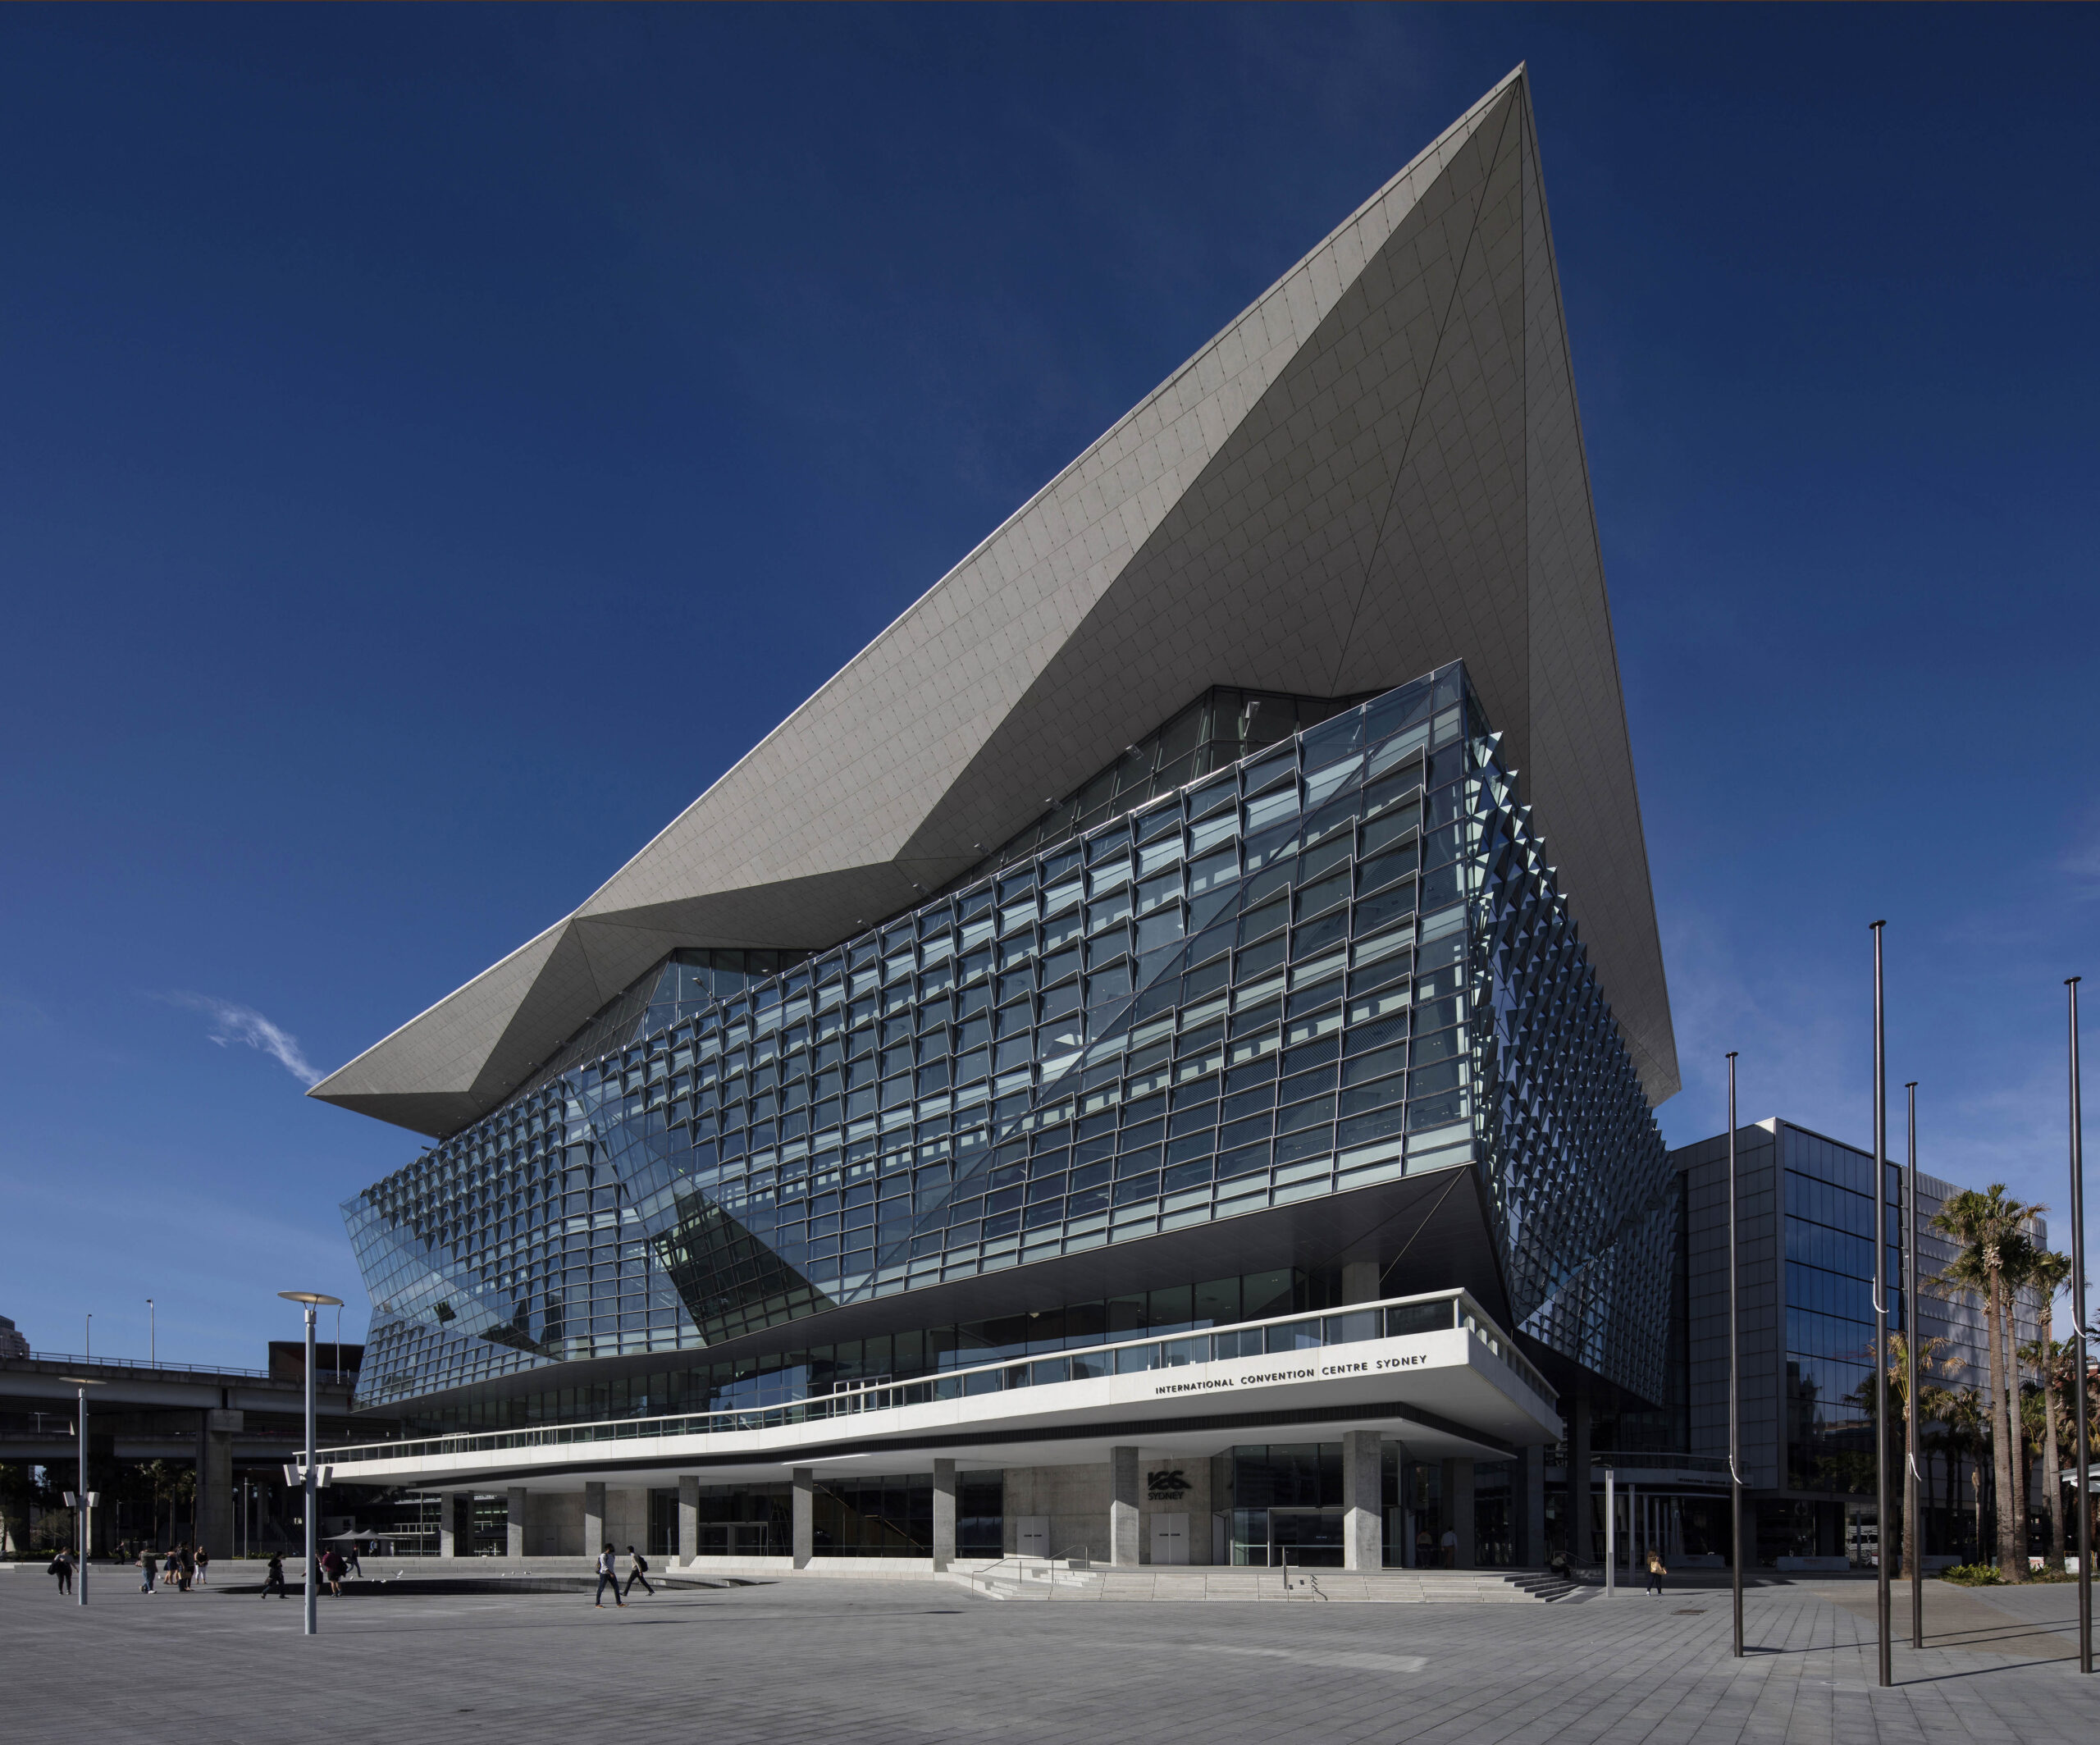 Sydney International Convention Center